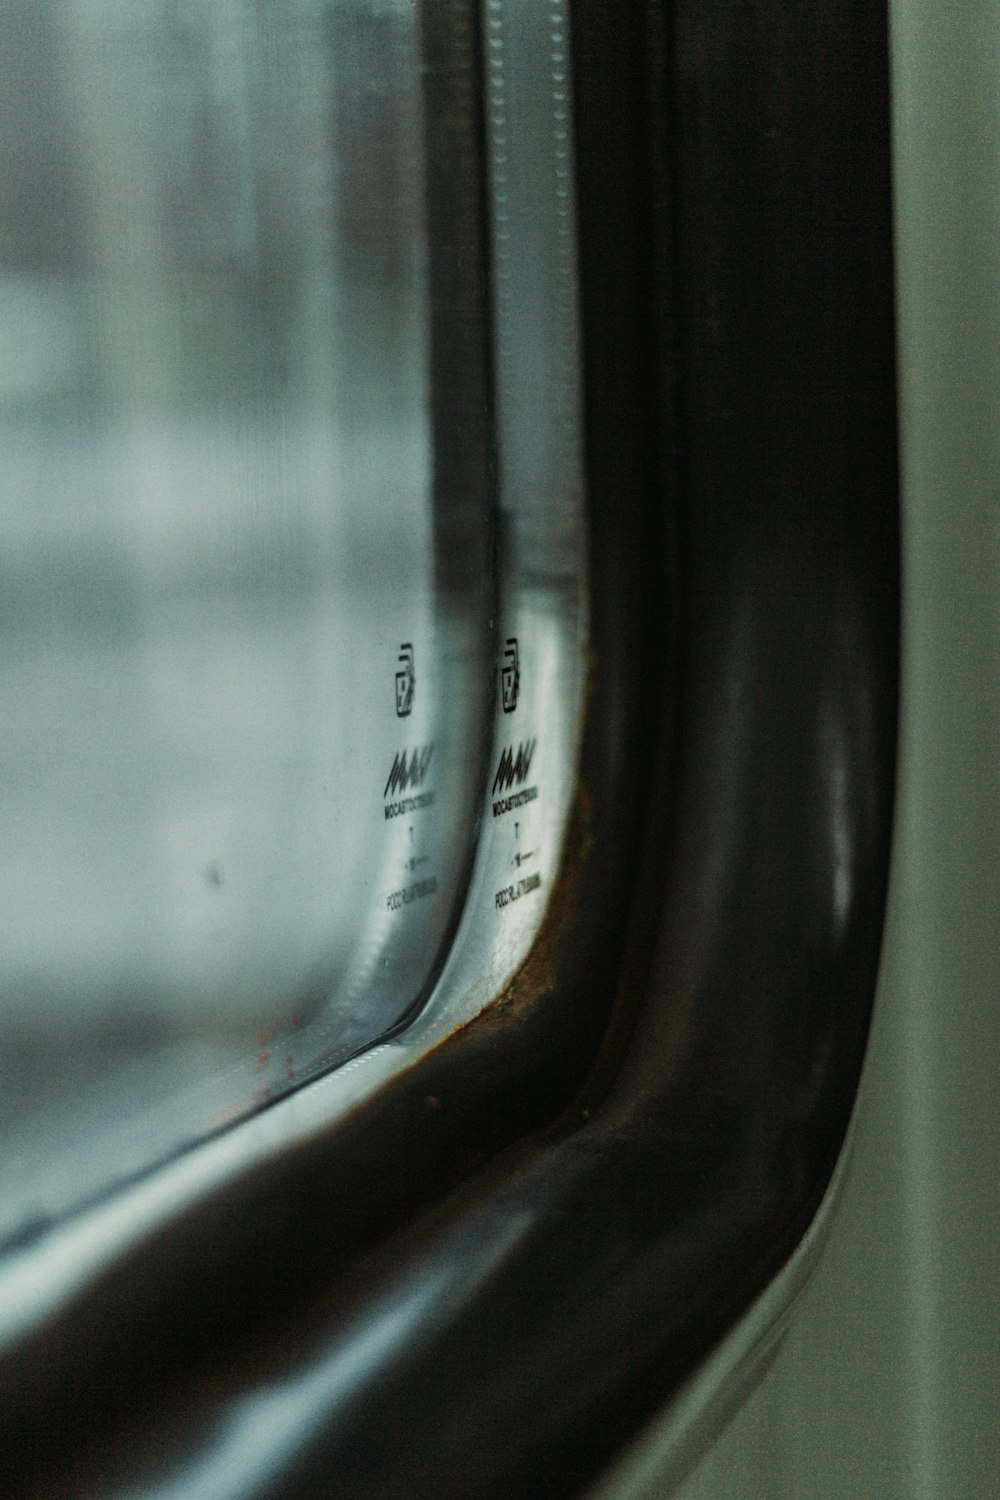 a close-up of a window